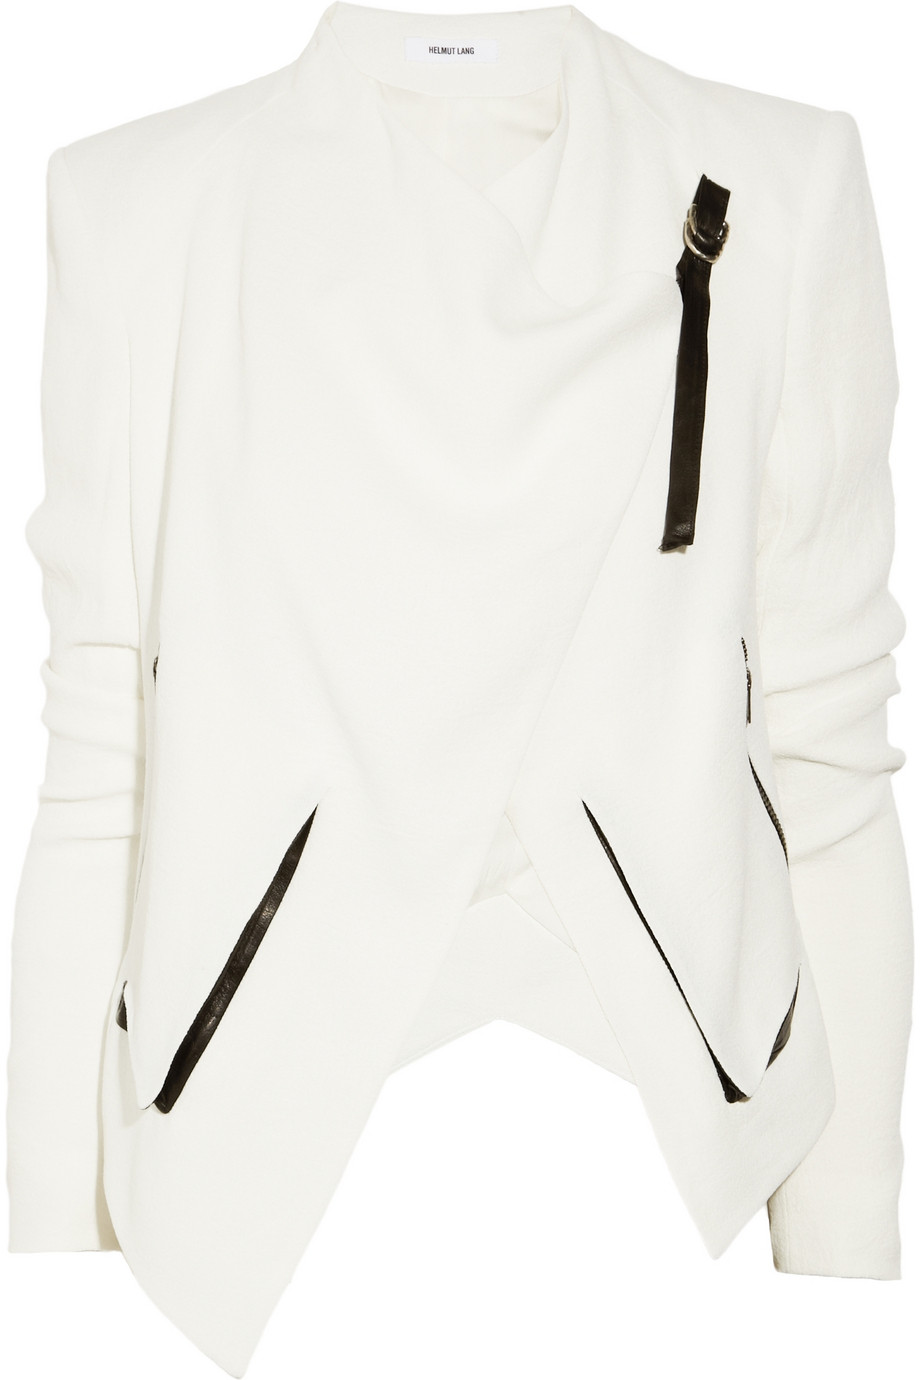 Helmut Lang Sugar Leather Trimmed Crepe Jacket in White | Lyst